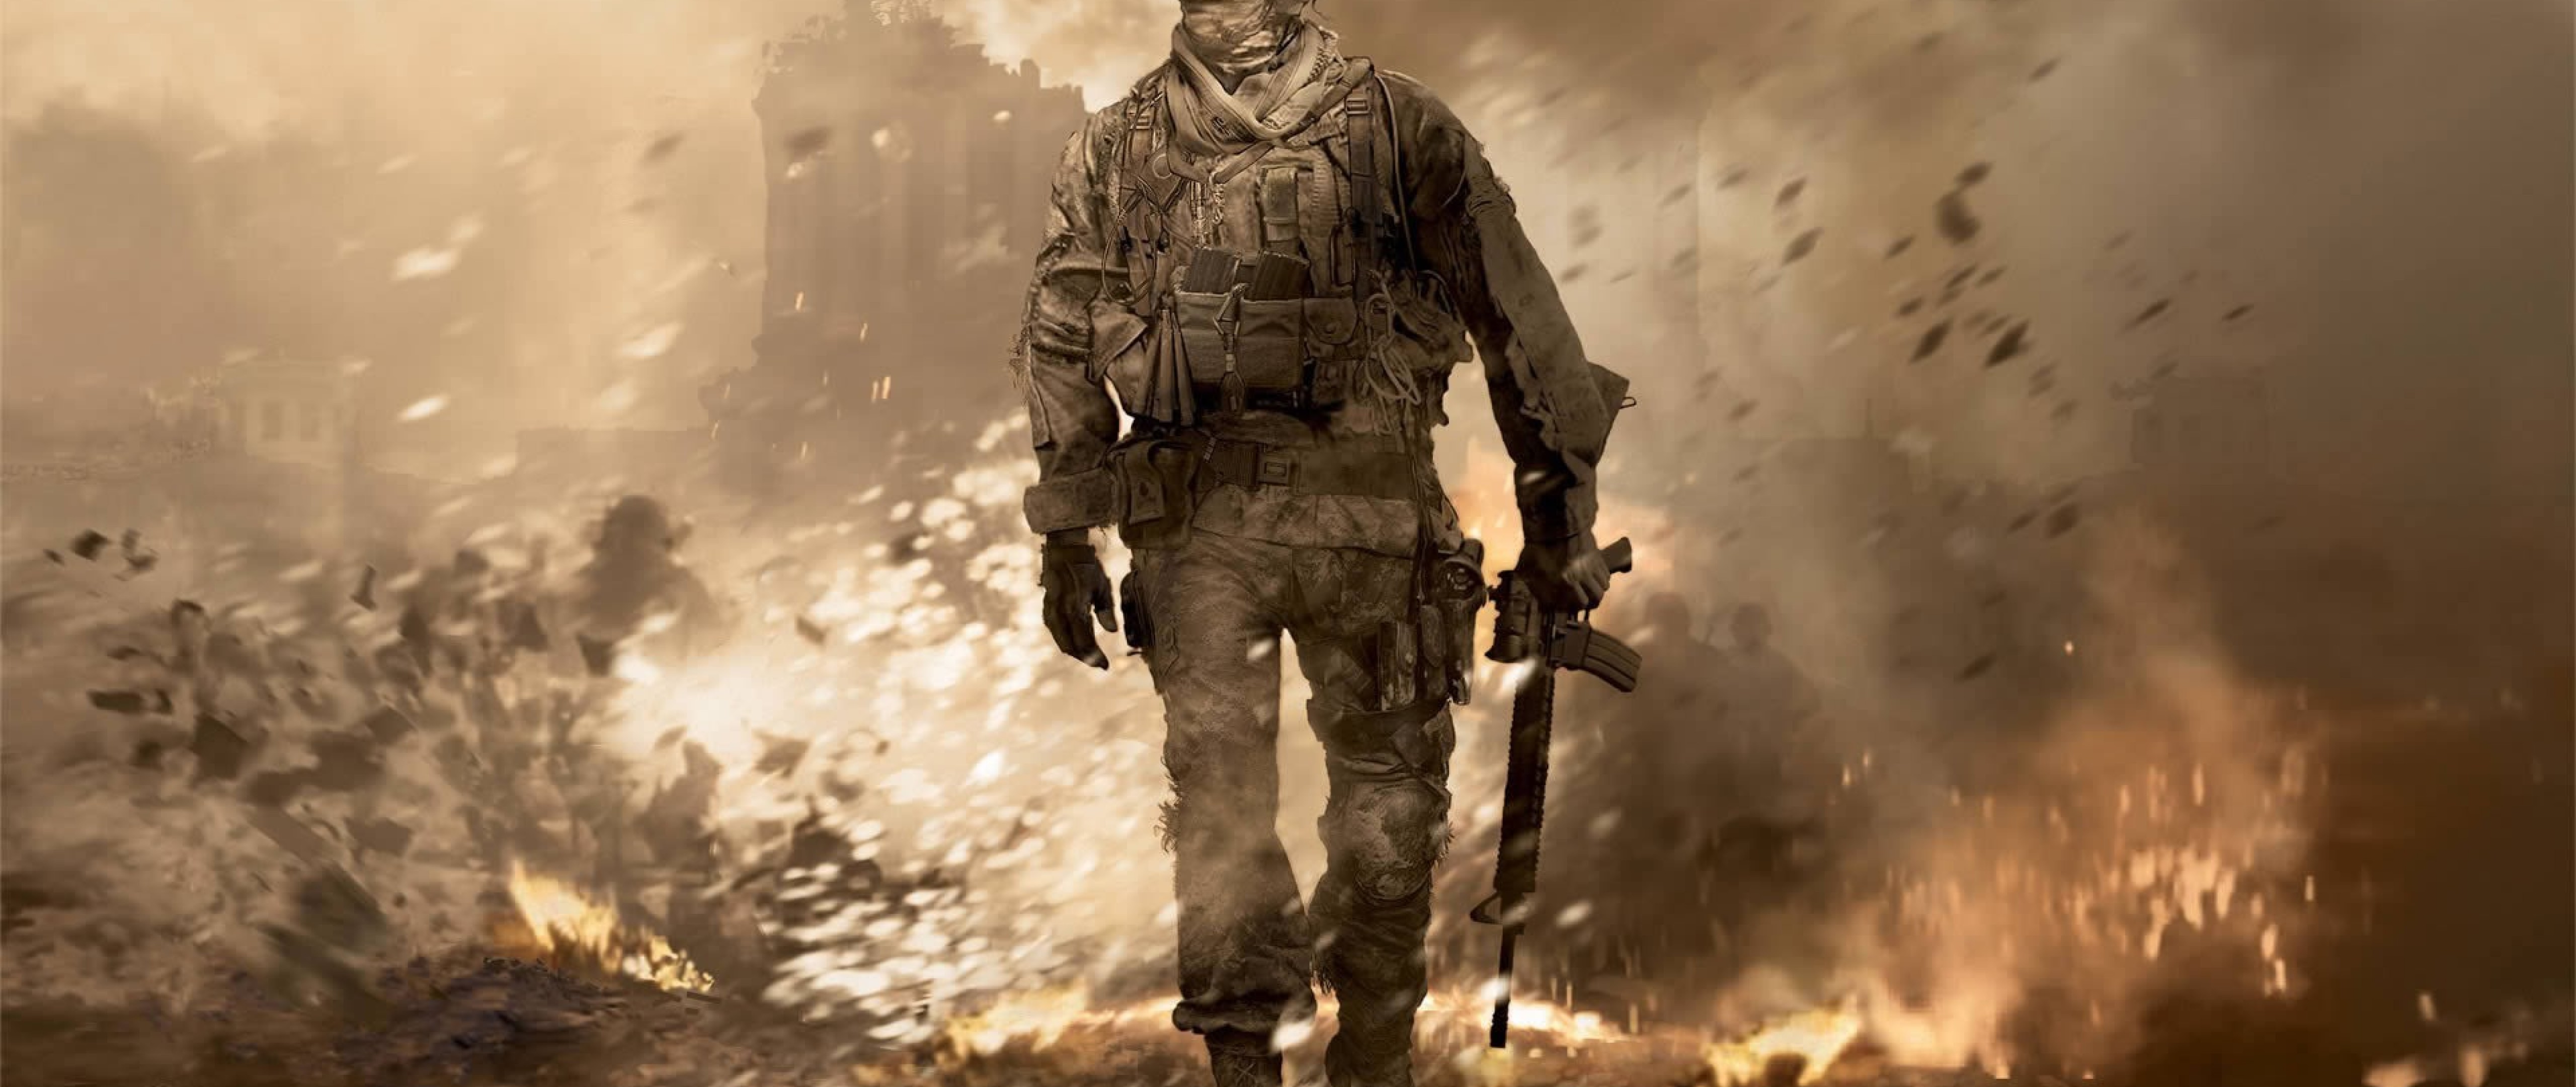 Call Of Duty Modern Warfare 2 Wallpaper For Desktop And Mobiles 4k